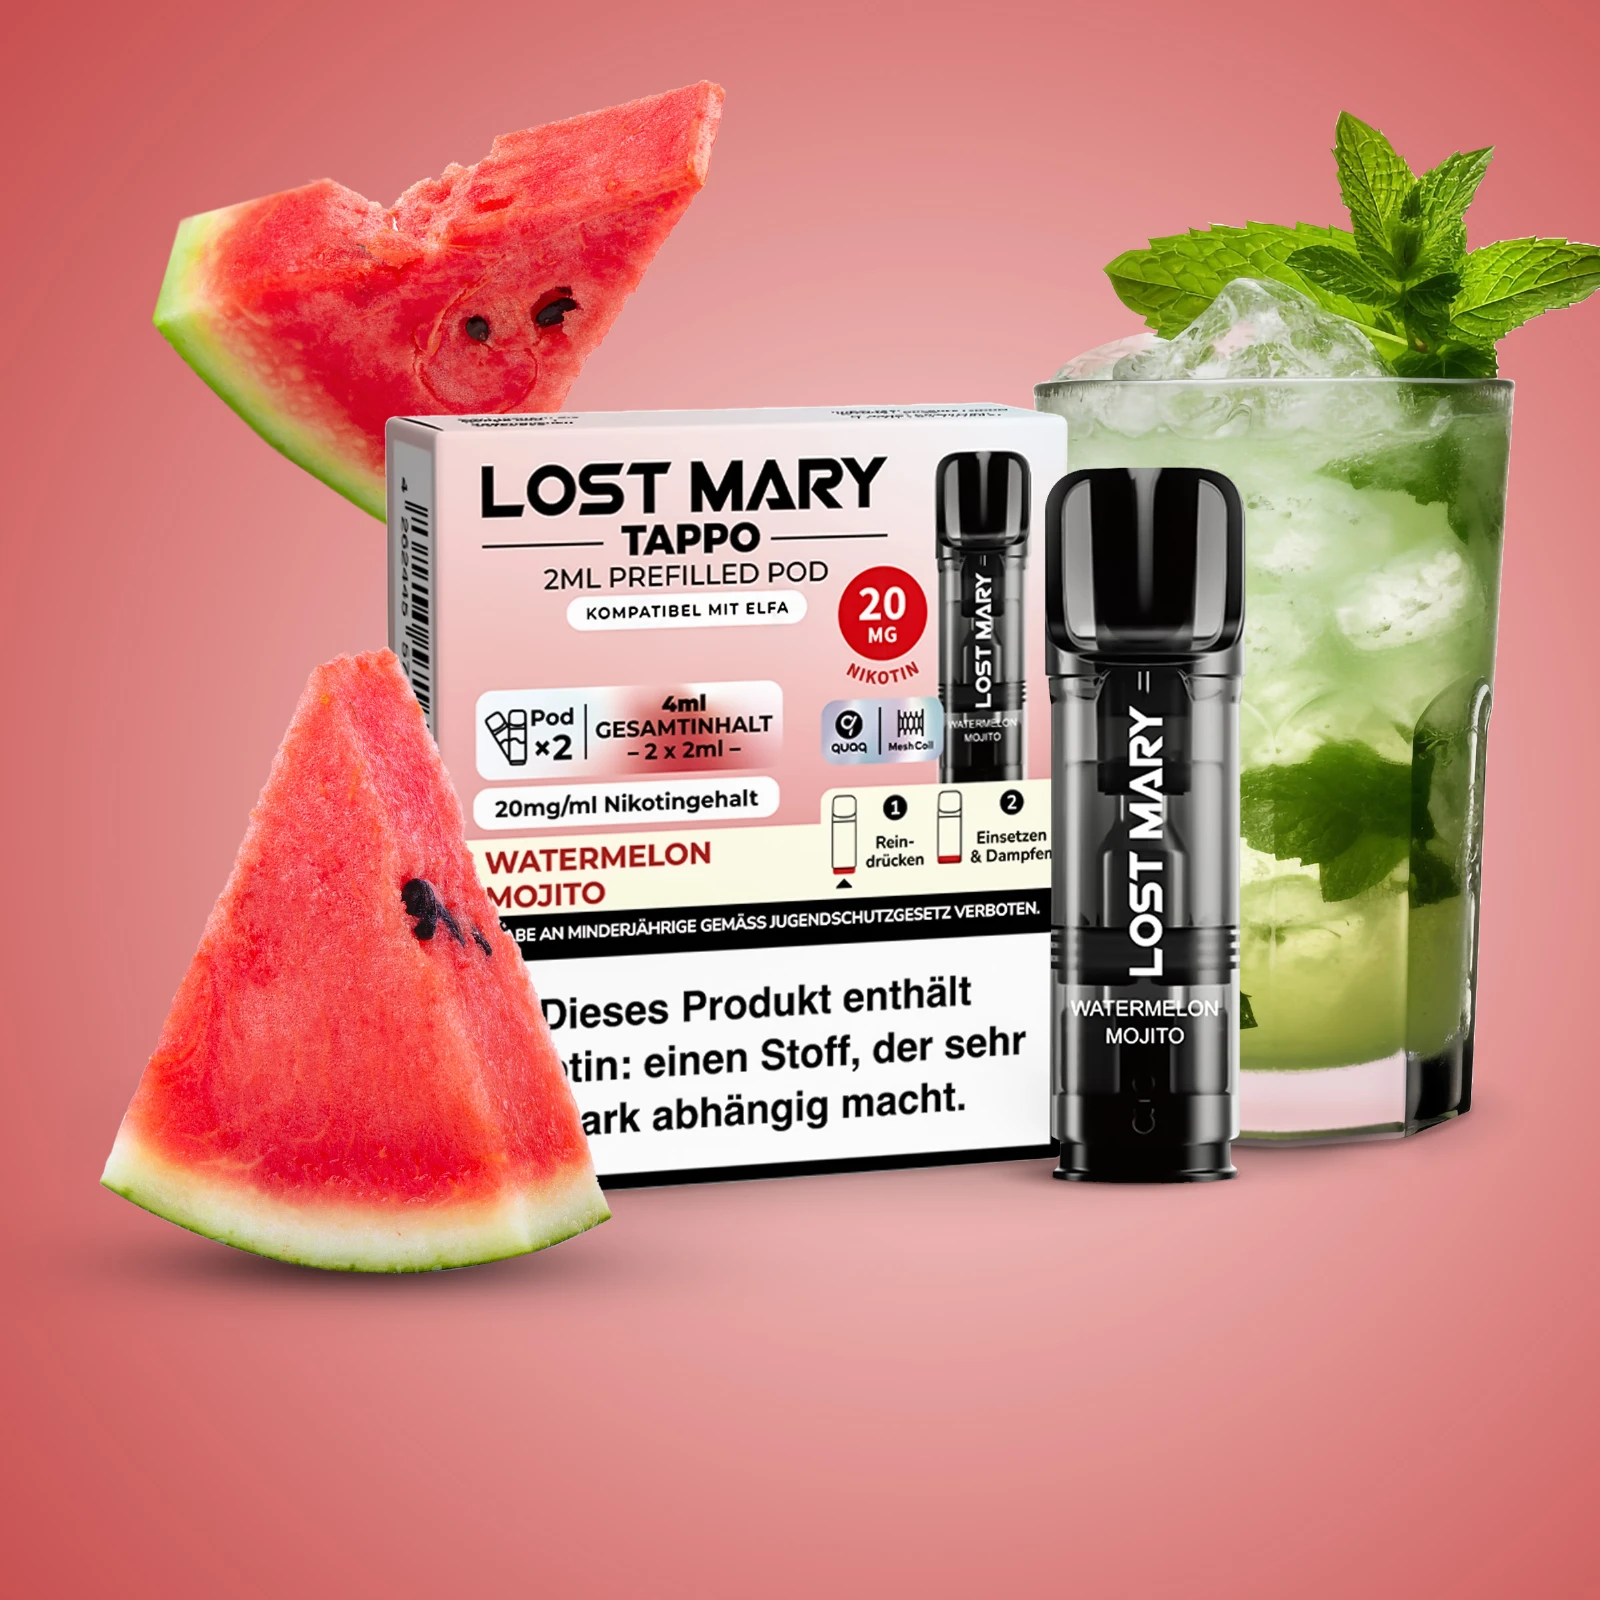 Lost Mary Tappo Watermelon Mojito: Umweltfreundliches Pod-System mit Prefilled Pods